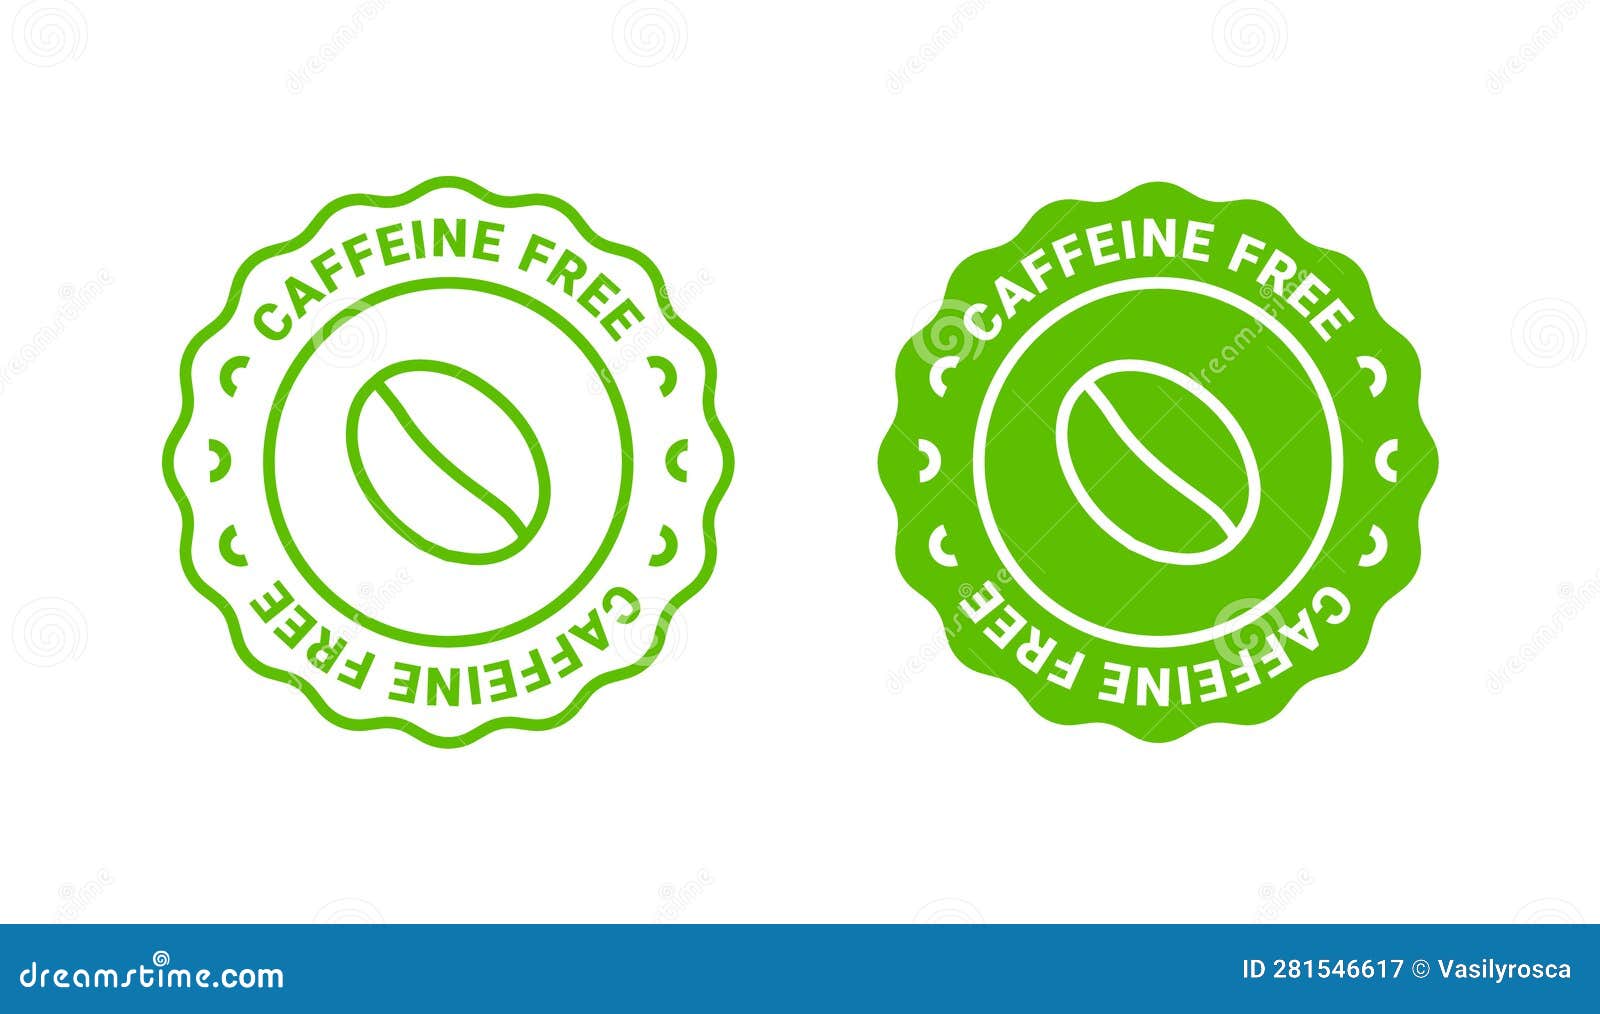 caffeine free  logo icon sign. allergy decaffeinated coffee  health natural eco label.